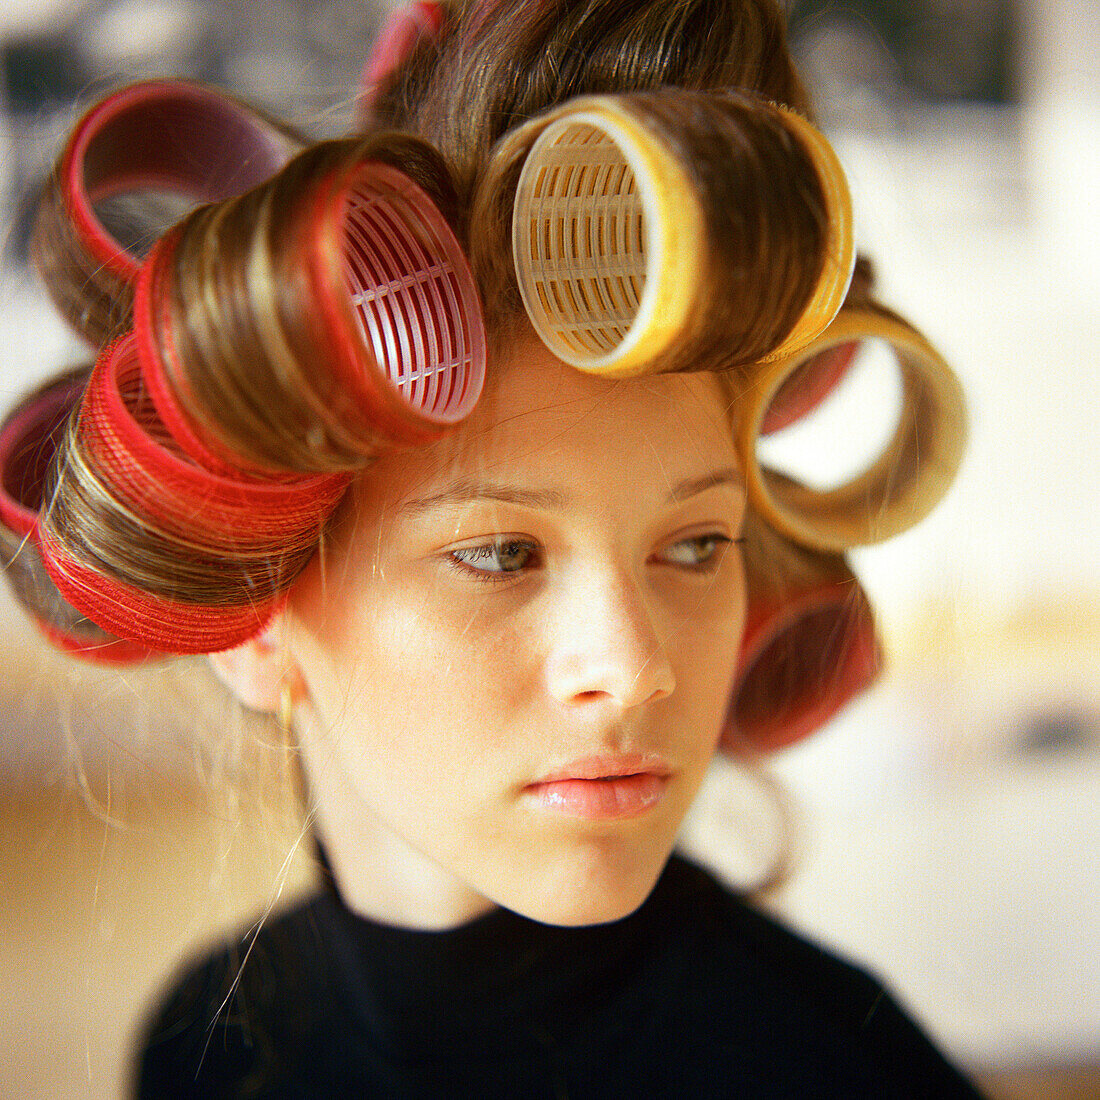 Junge Frau mit Lockenwicklern im Haar